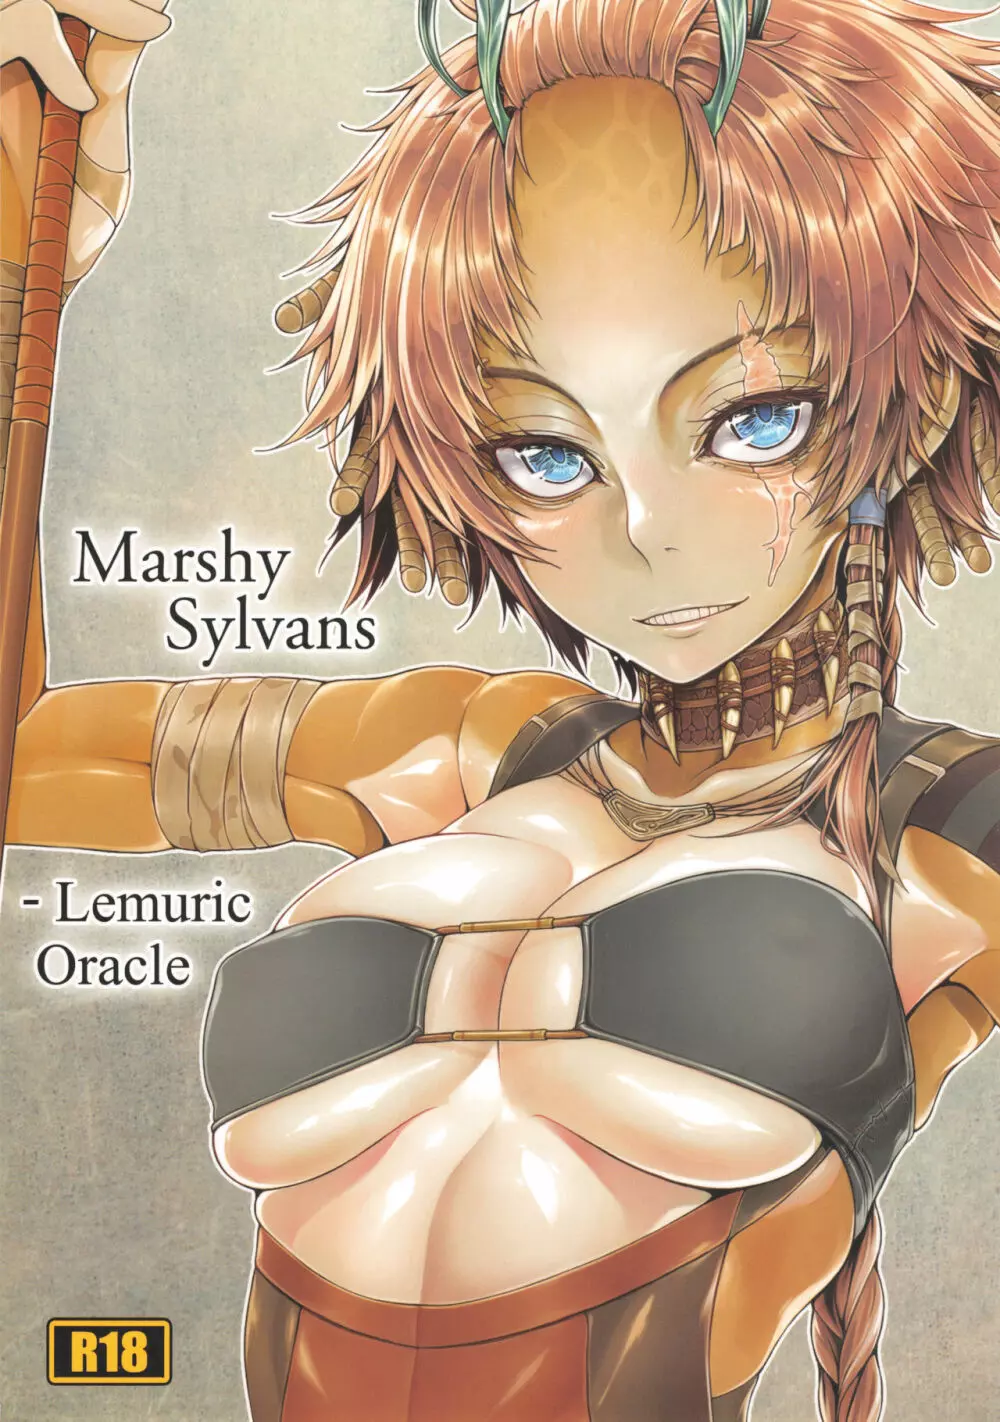 Marshy Sylvans - Lemuric Oracle - page1